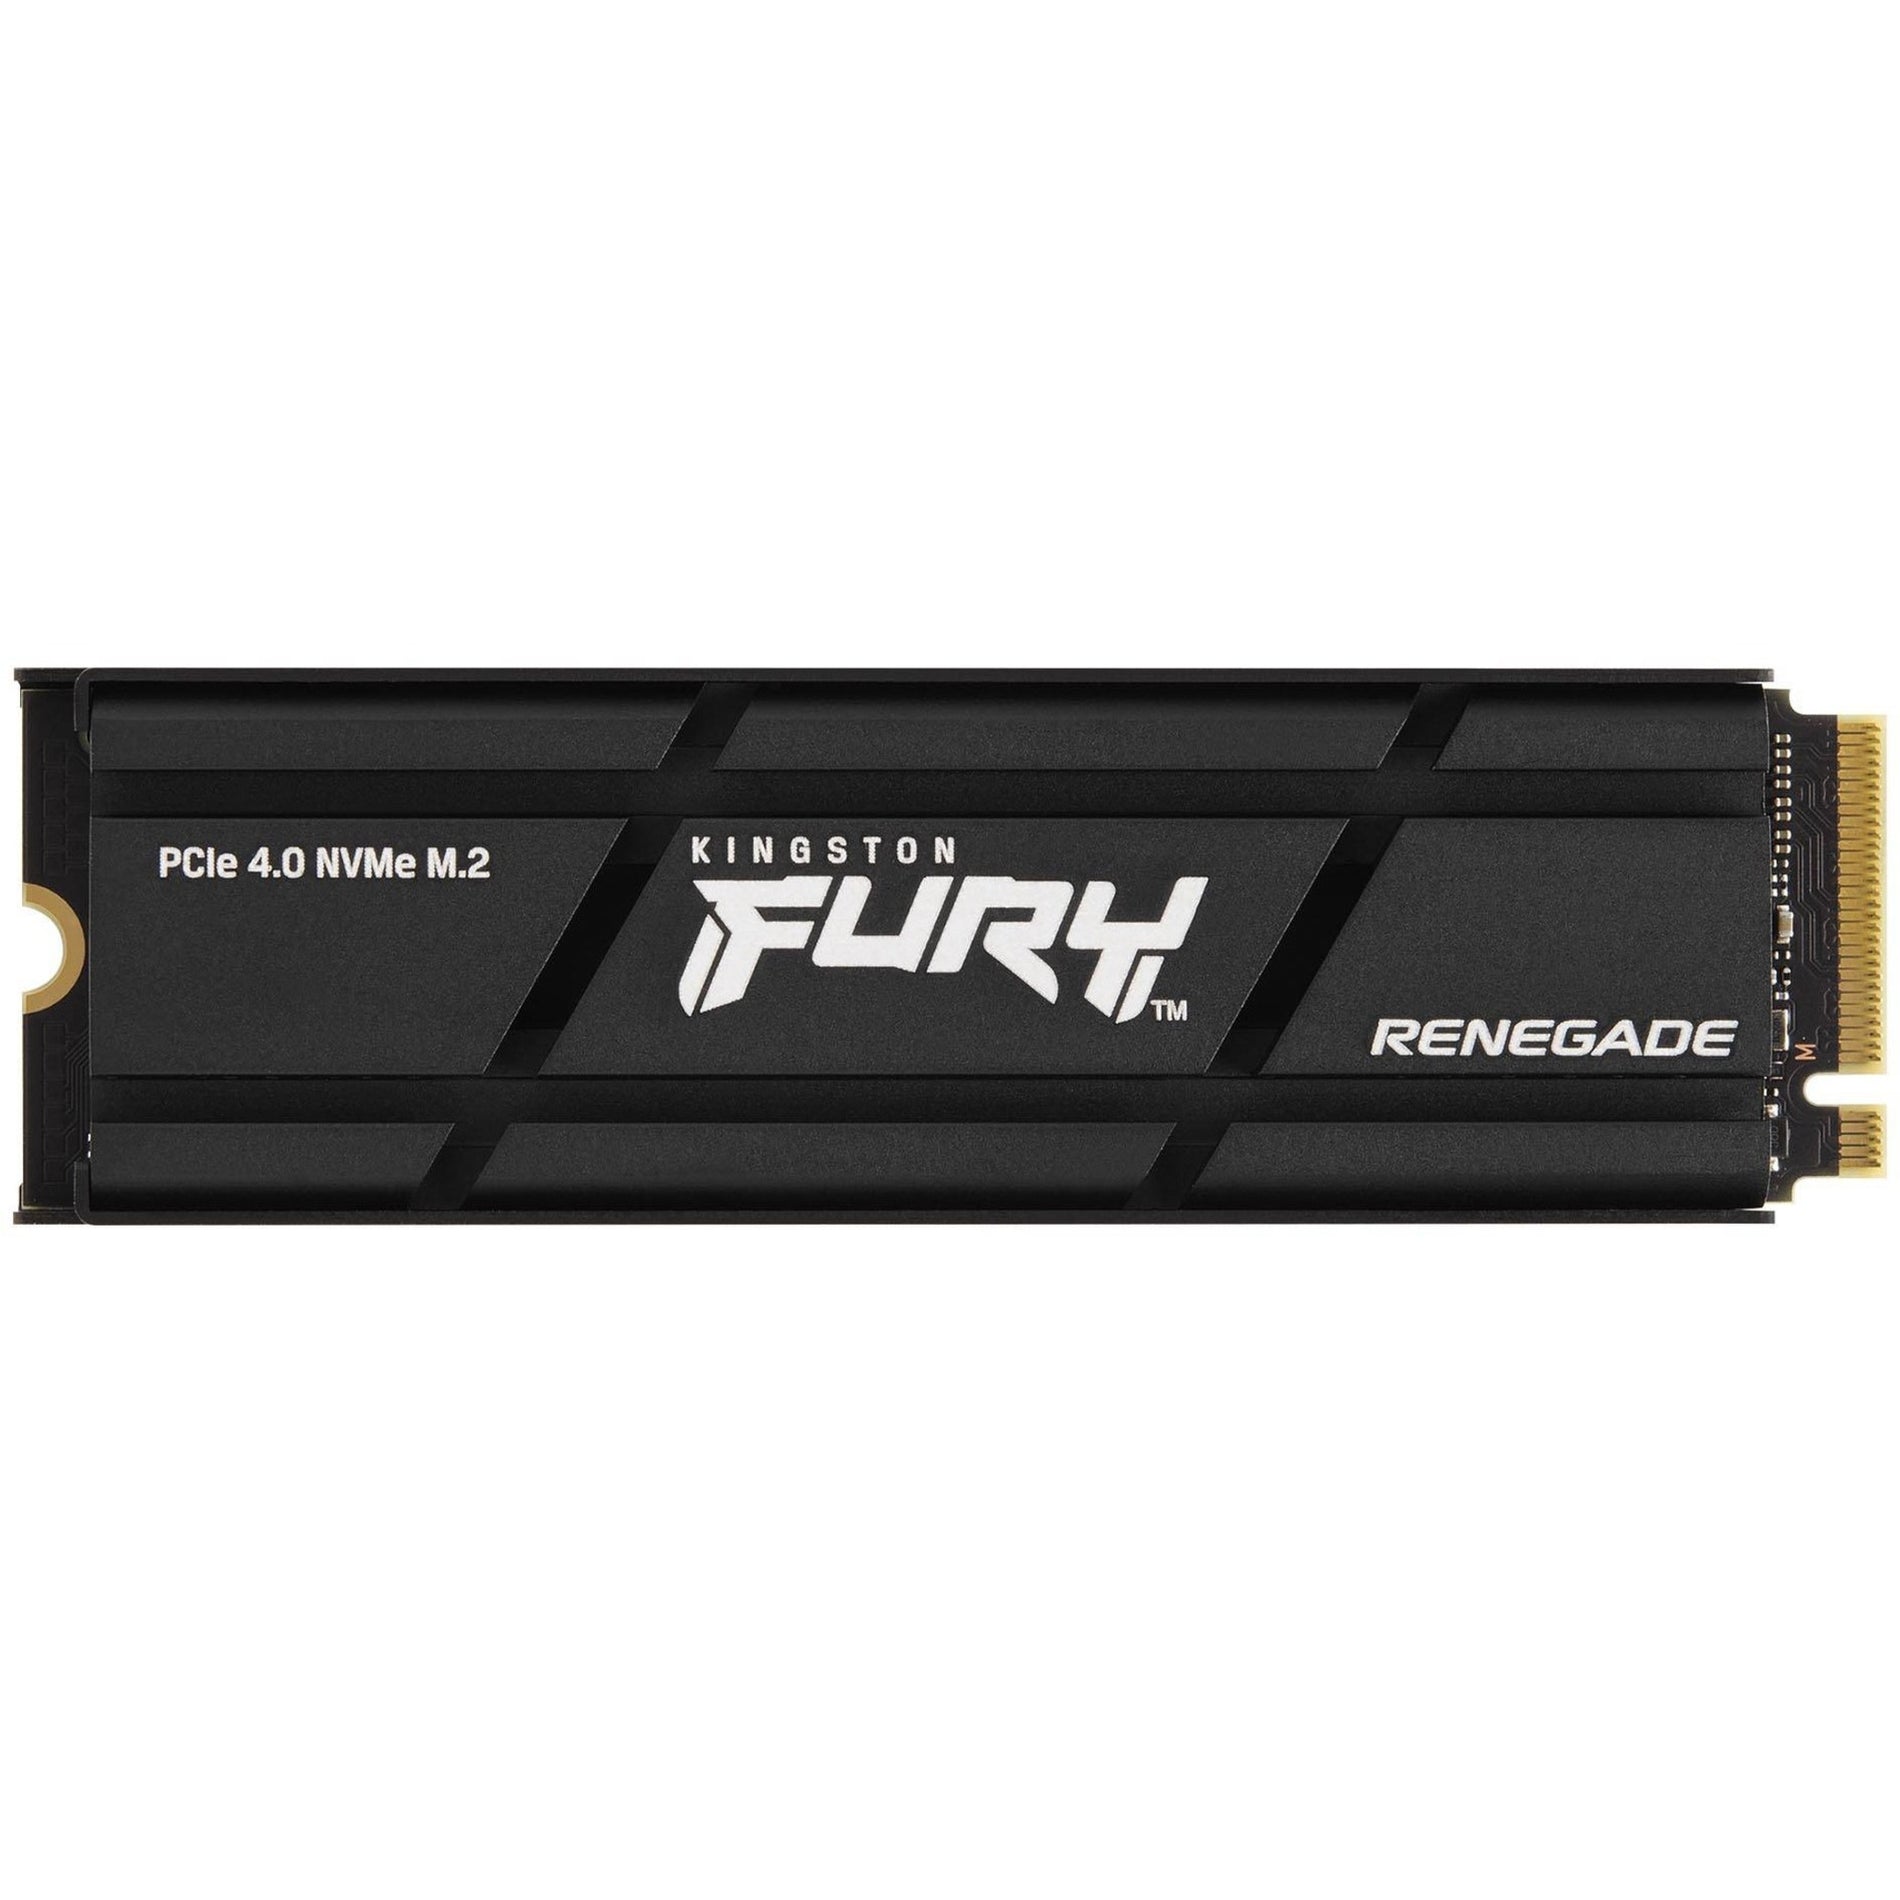 Kingston SFYRDK/2000G FURY Renegade Solid State Drive, 2TB PCIe 4.0 NVMe SSD, 5-Year Warranty